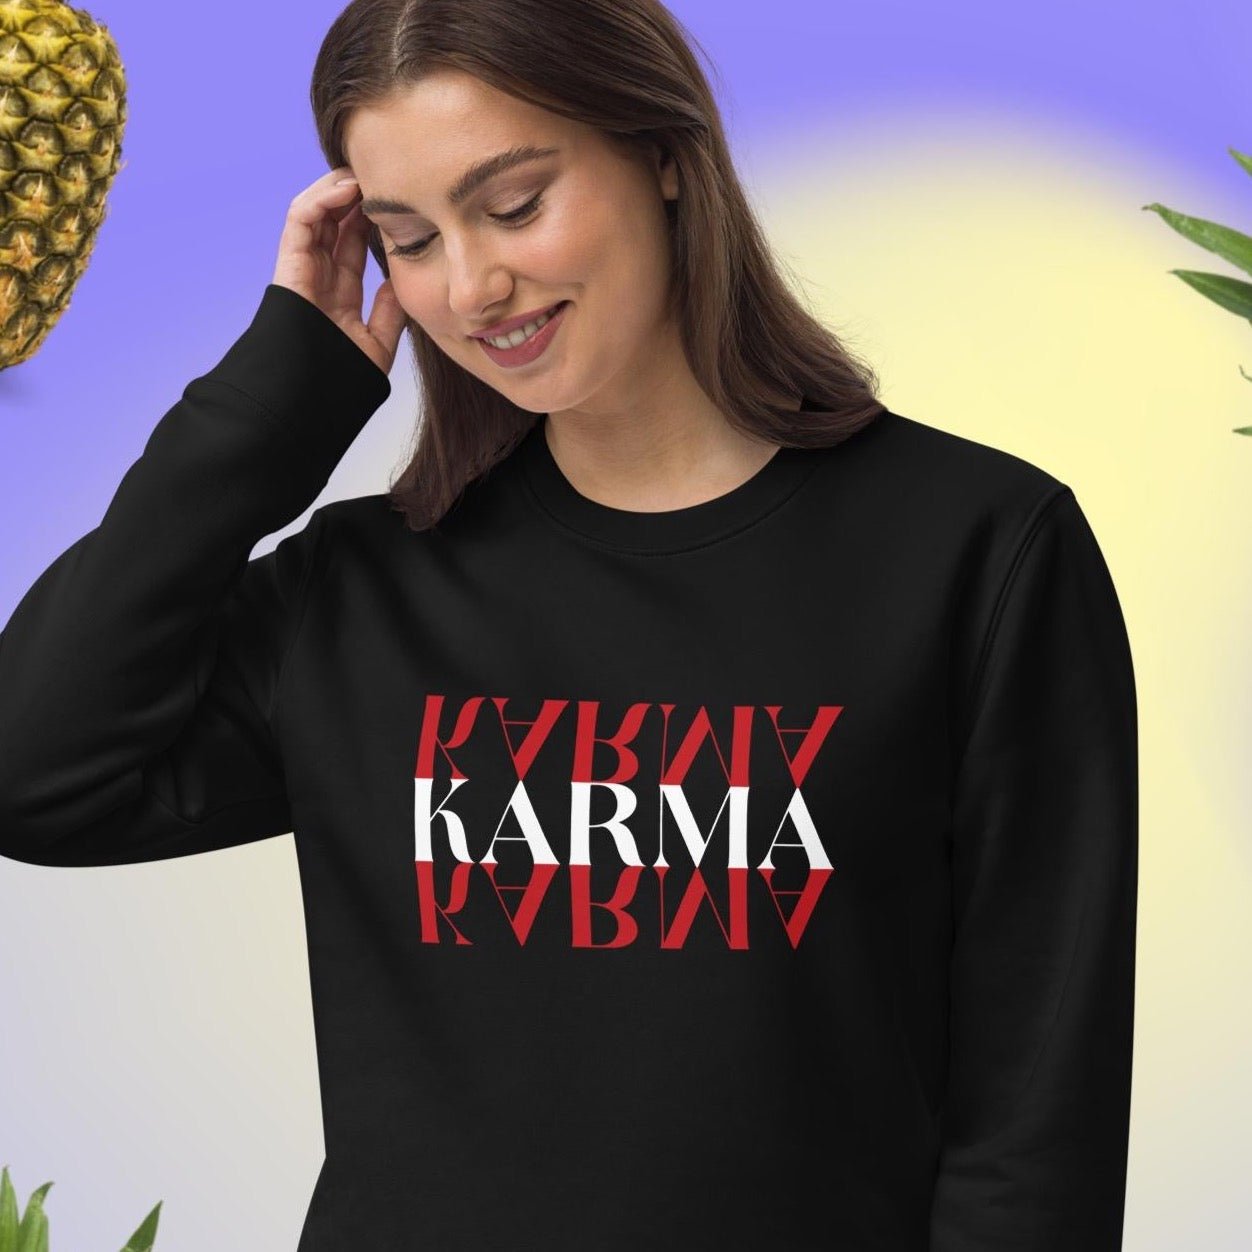 Contemporary 'Karma Karma Karma' Organic Cotton Sweatshirt - Karma